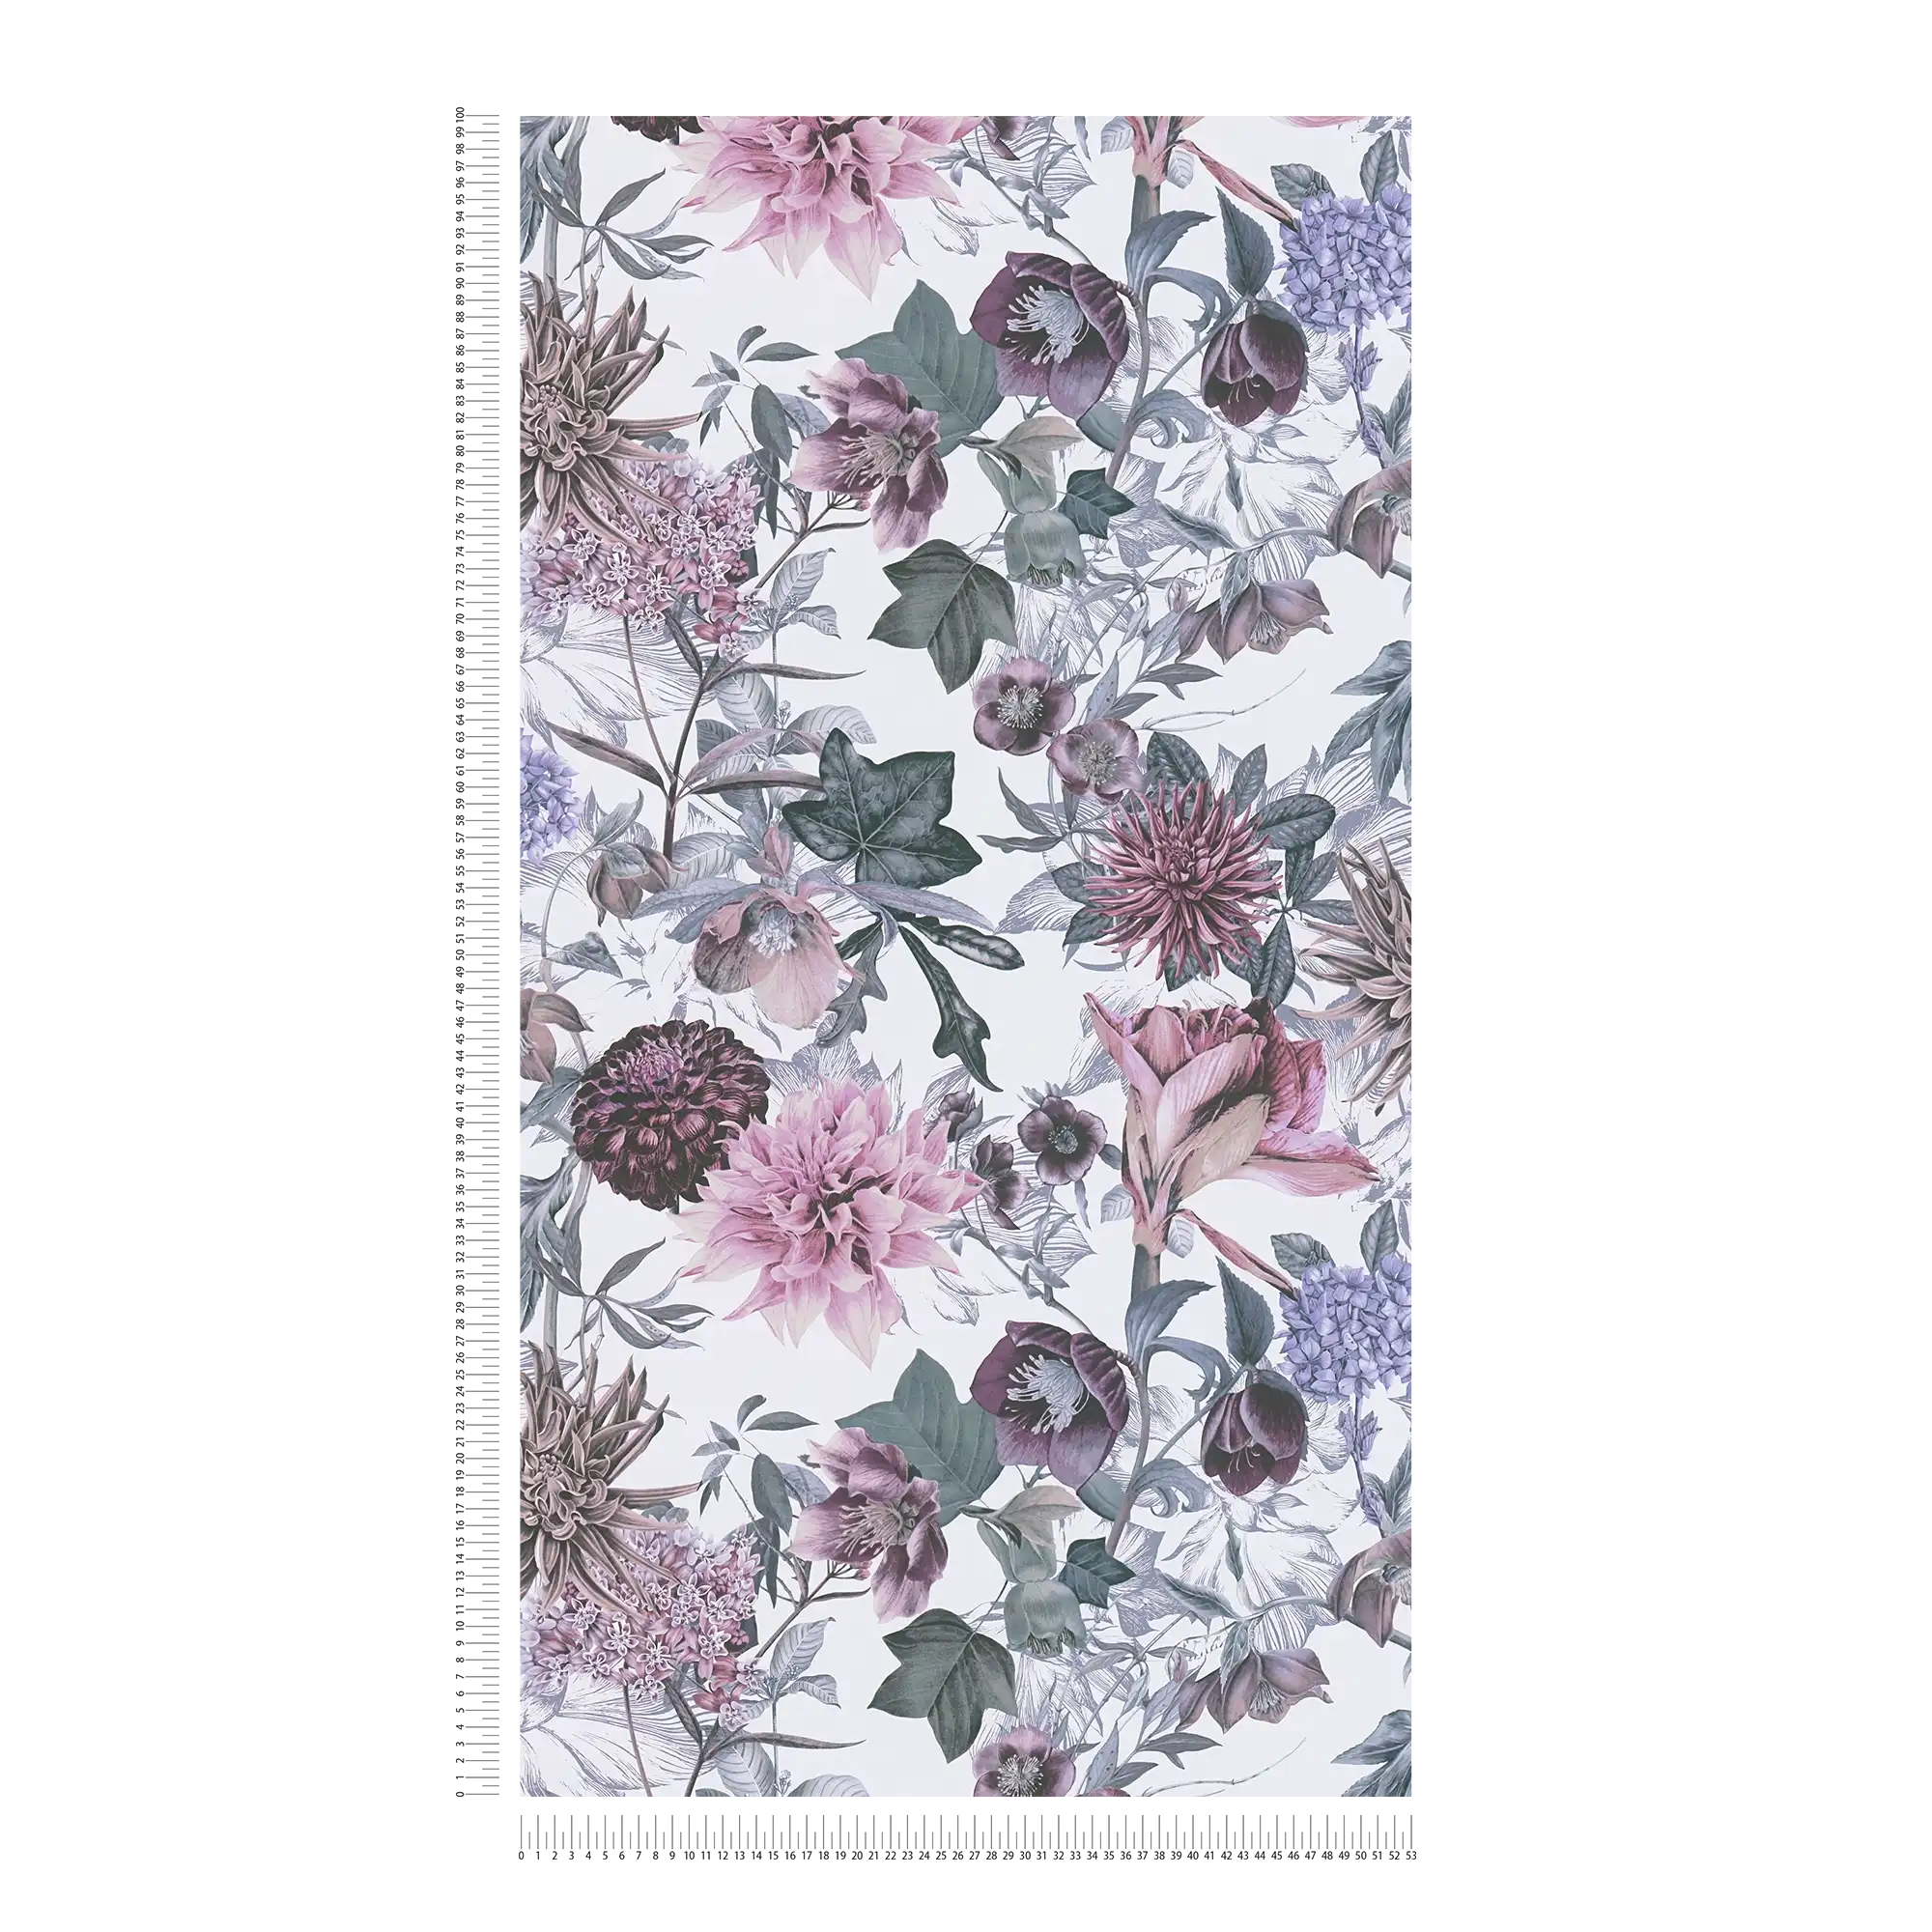             Floral wallpaper floral design with leaves - pink, grey
        